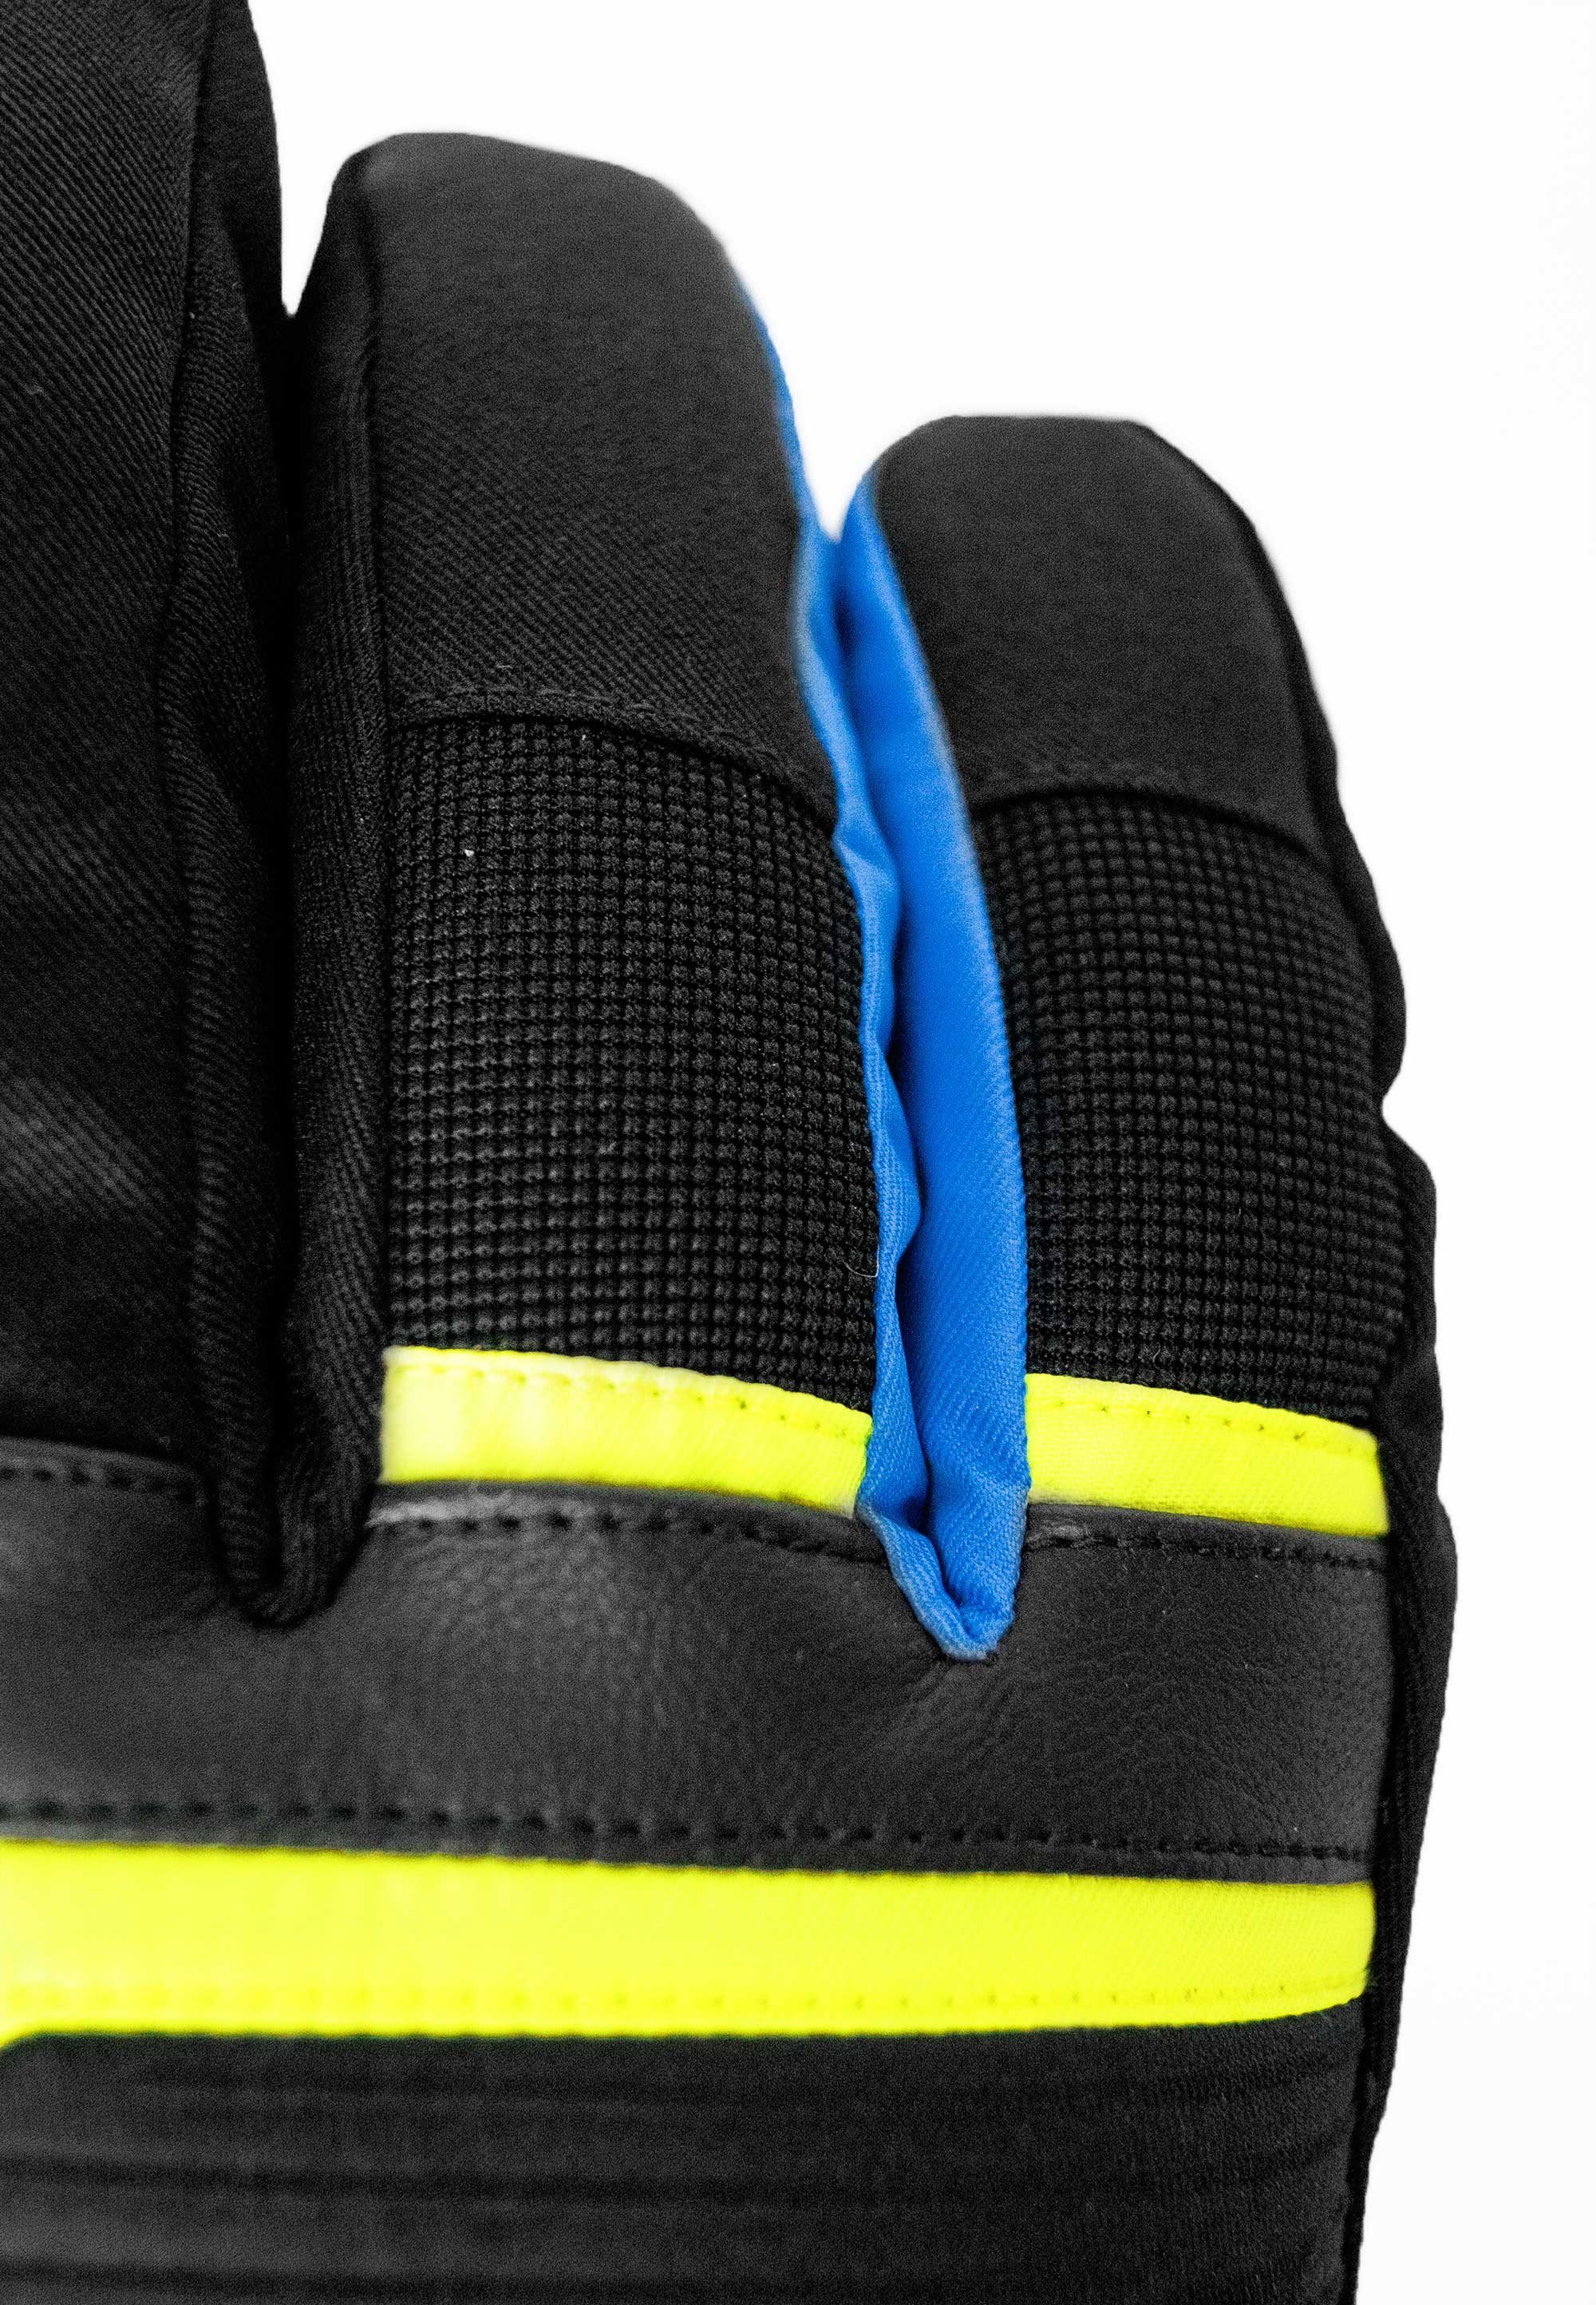 Skihandschuhe XT wasserdichtem Reusch und Venom atmungsaktivem aus Material R-TEX® schwarz-blau